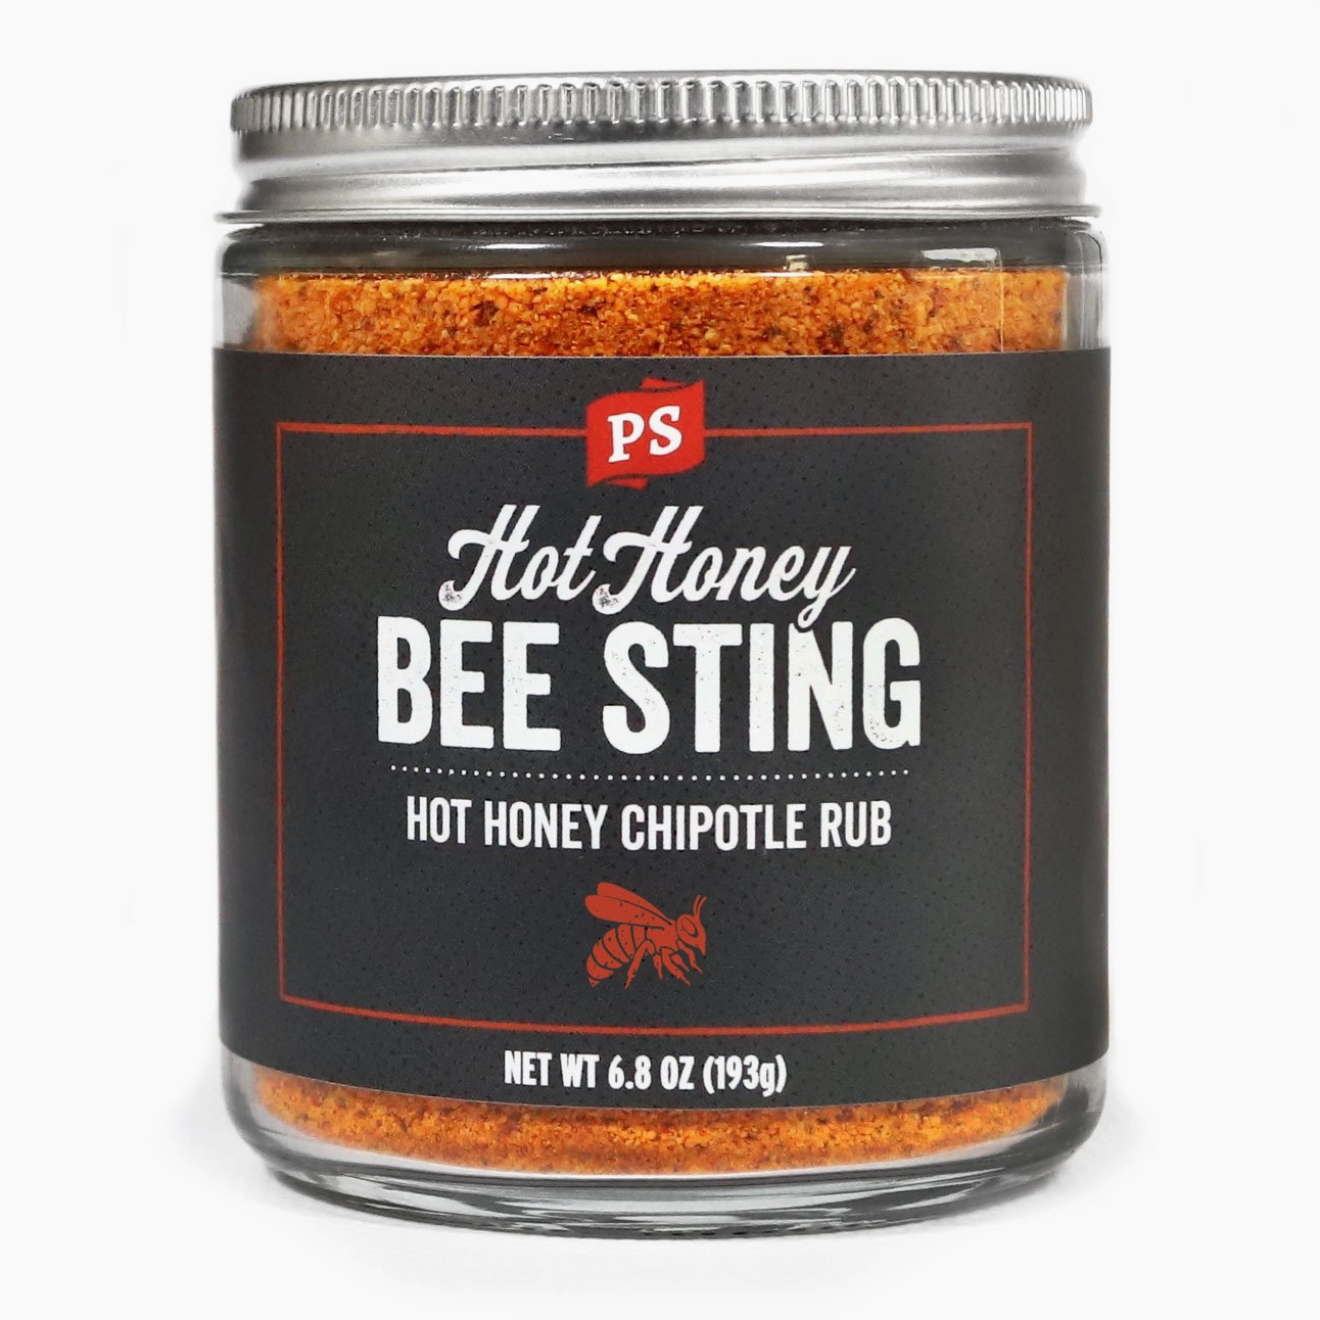 Hot Honey Chipotle Rub